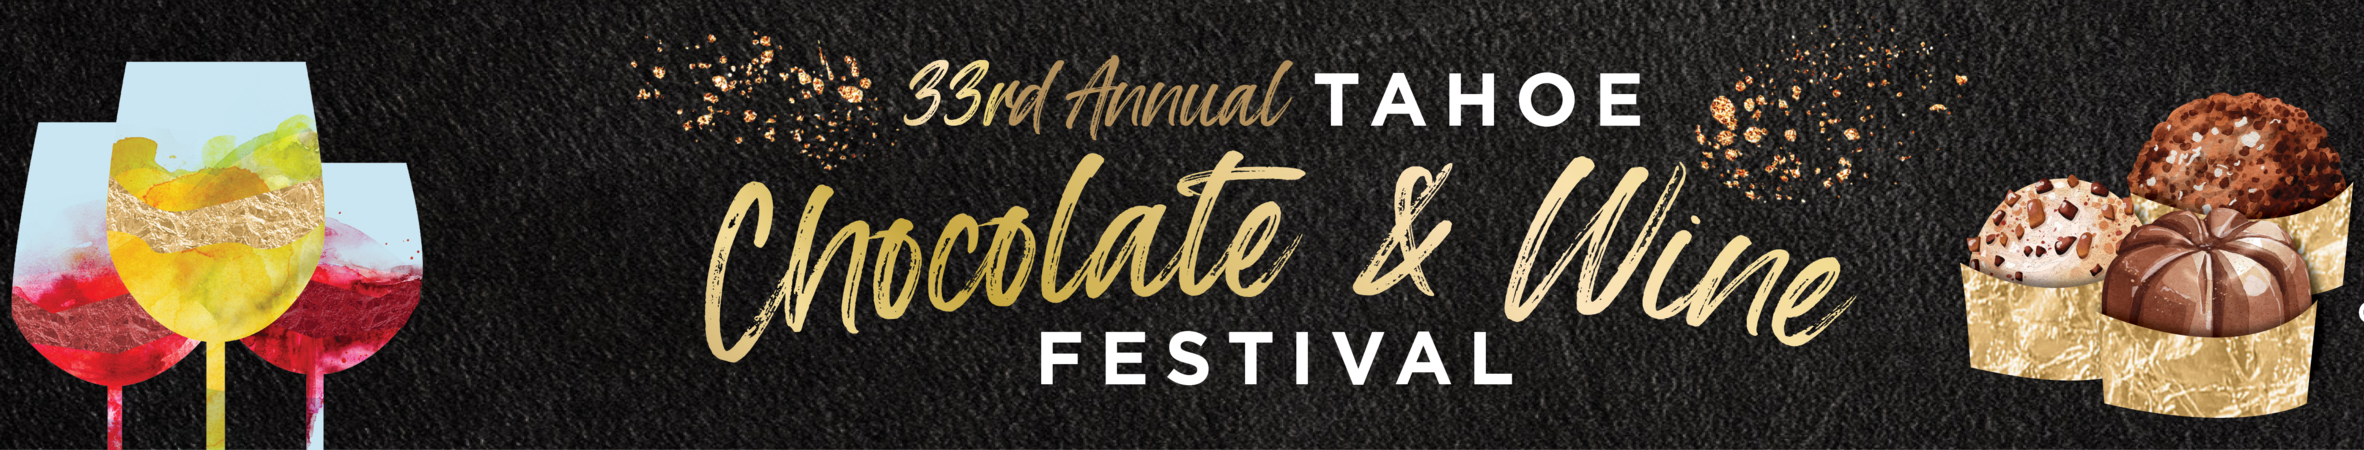 33rd Annual Tahoe Chocolate & Wine Festival